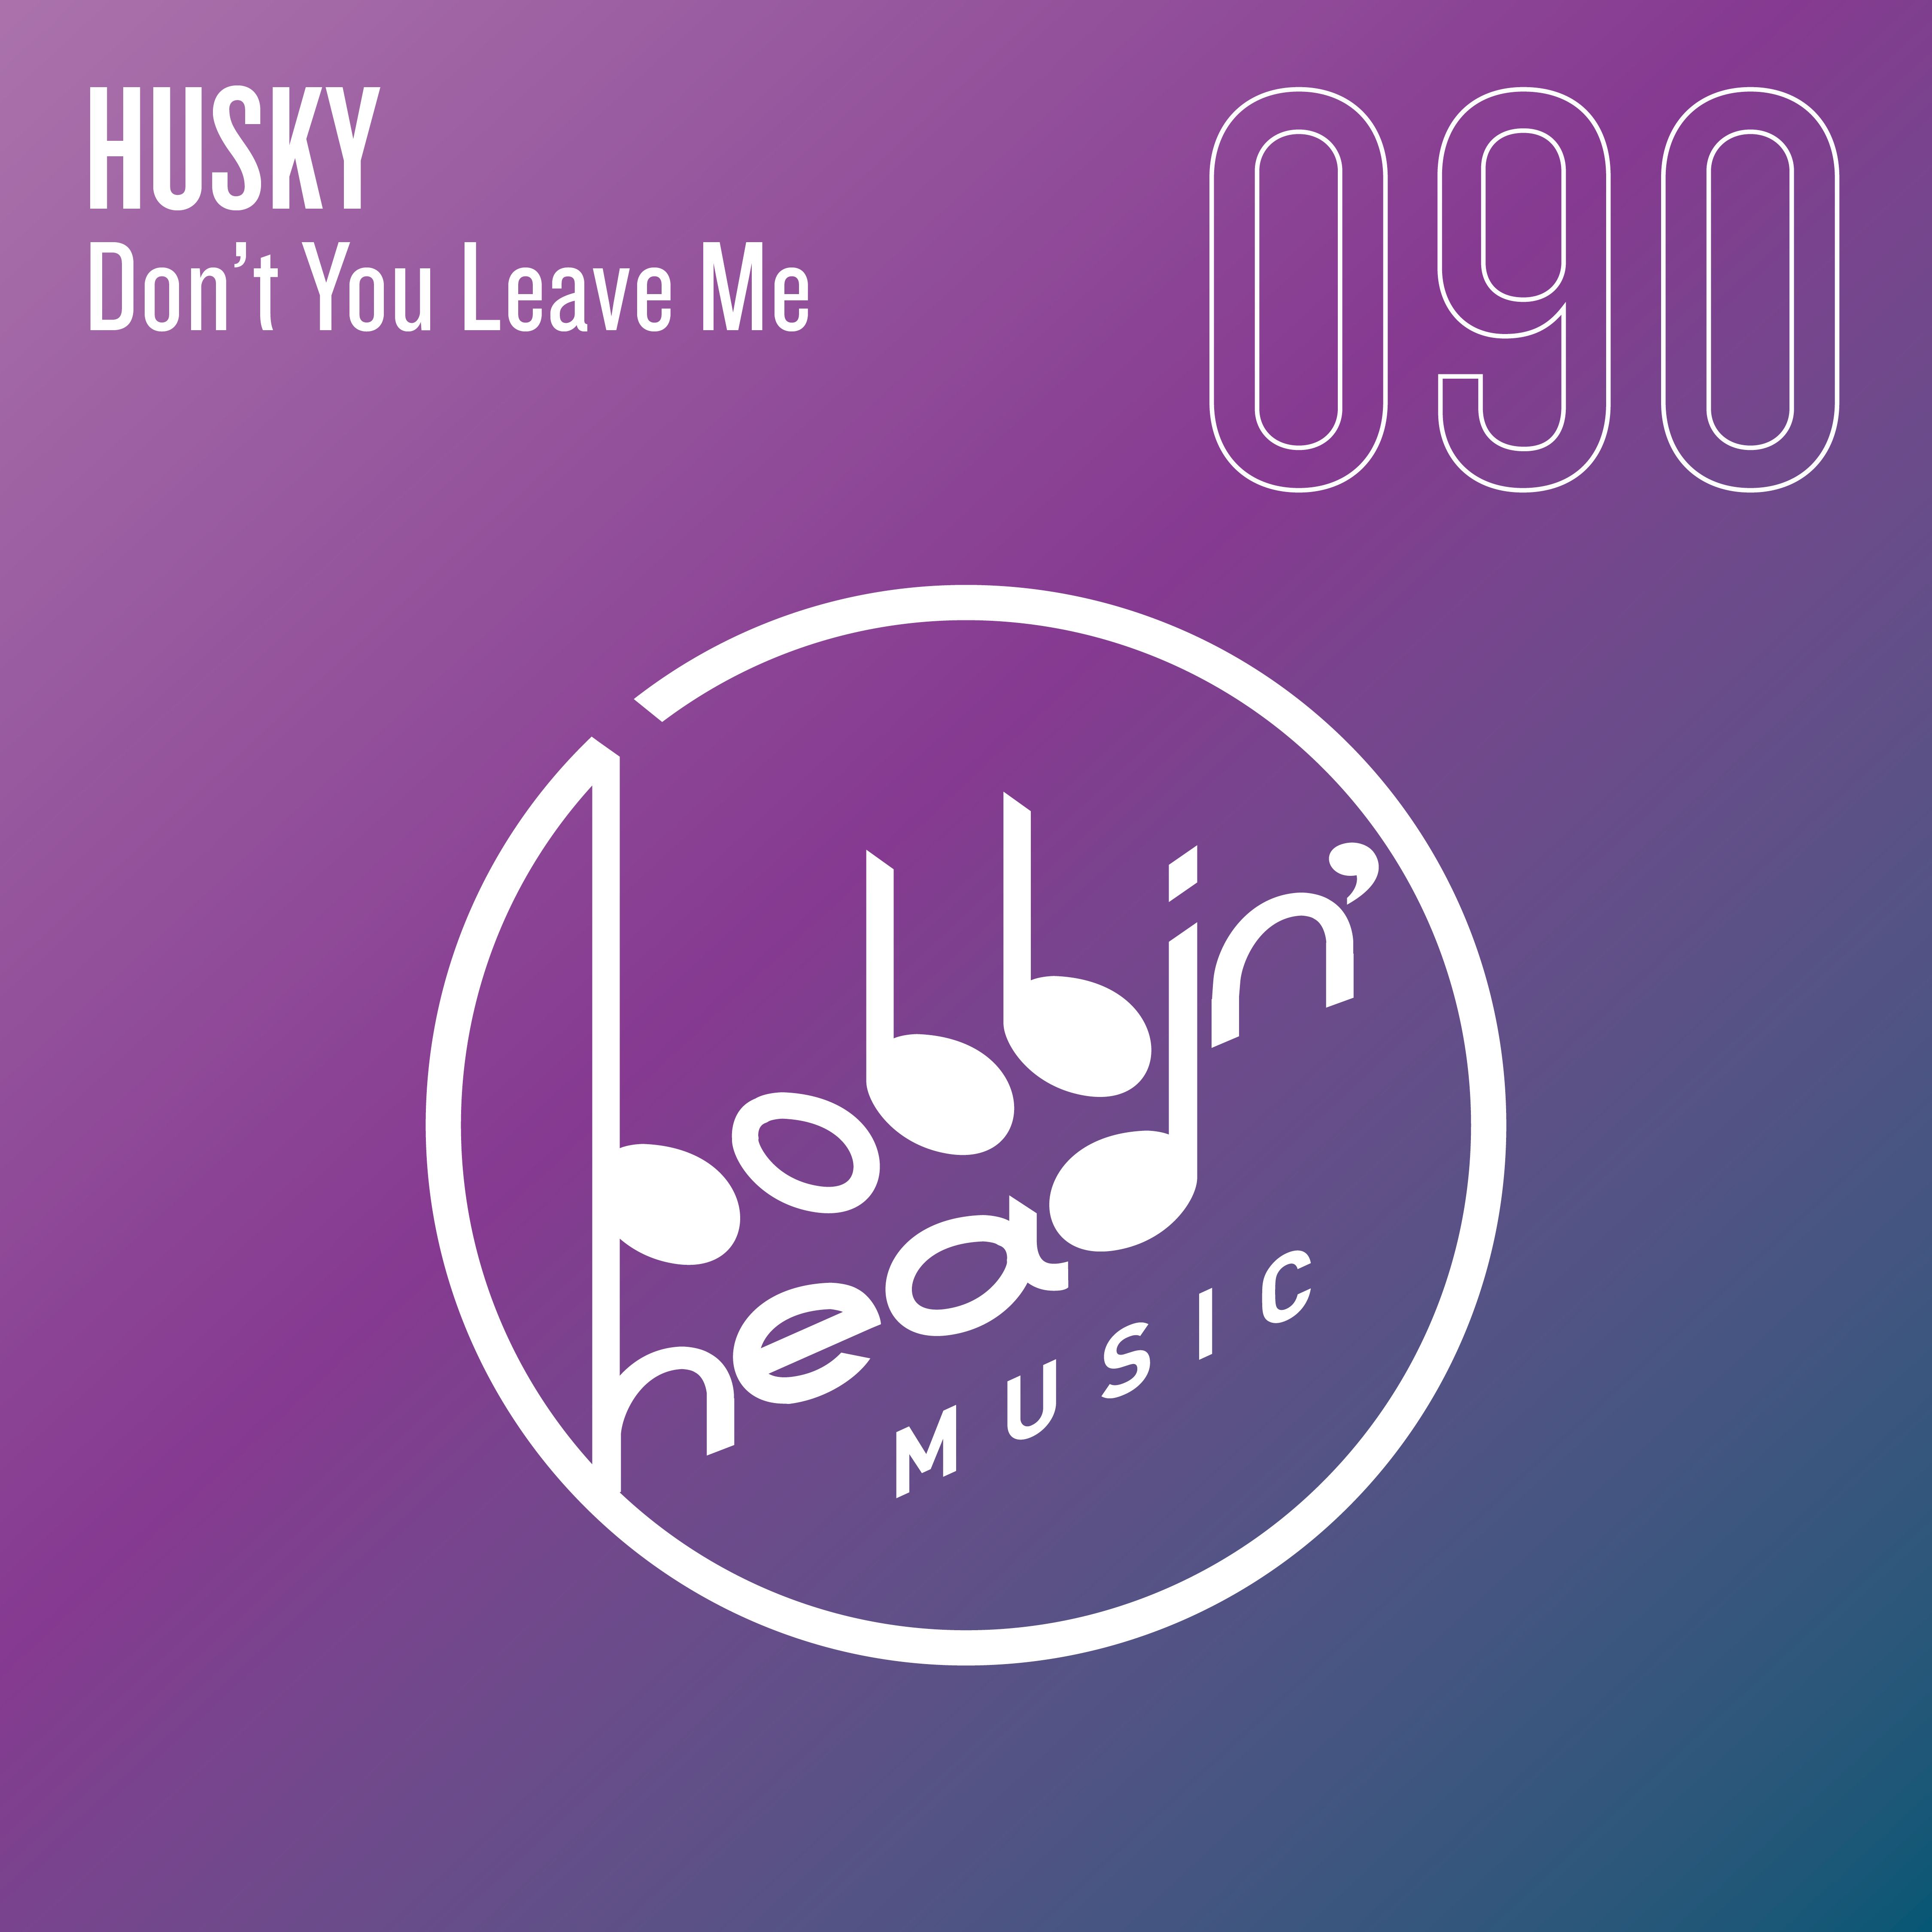 Télécharger Husky - Don't You Leave Me [Bobbin' Head Music]